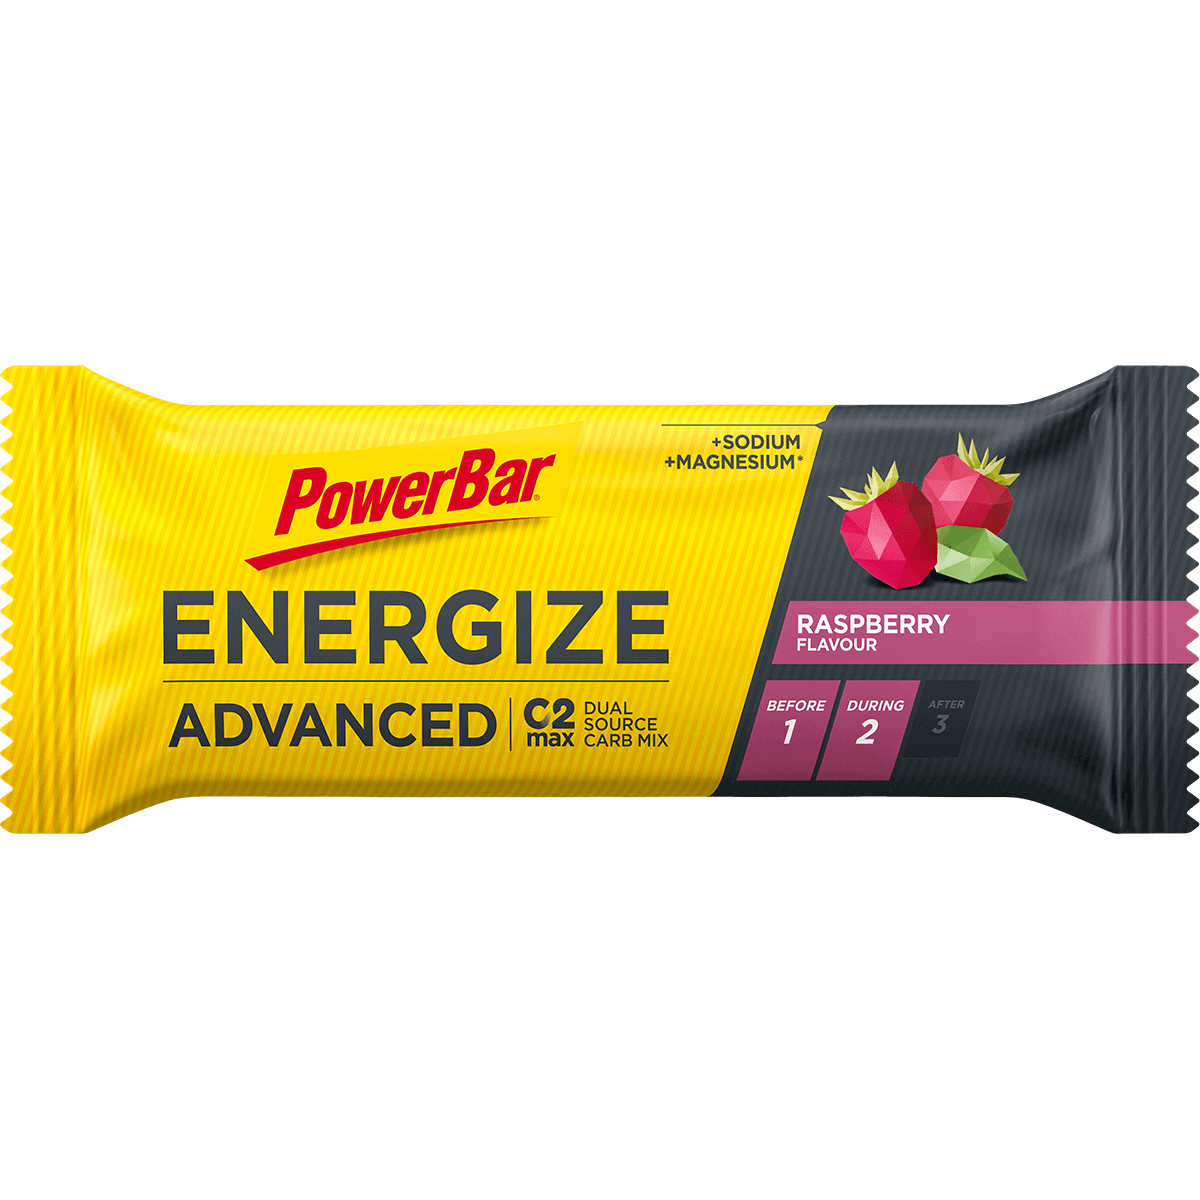 Energize Advanced F2 Box